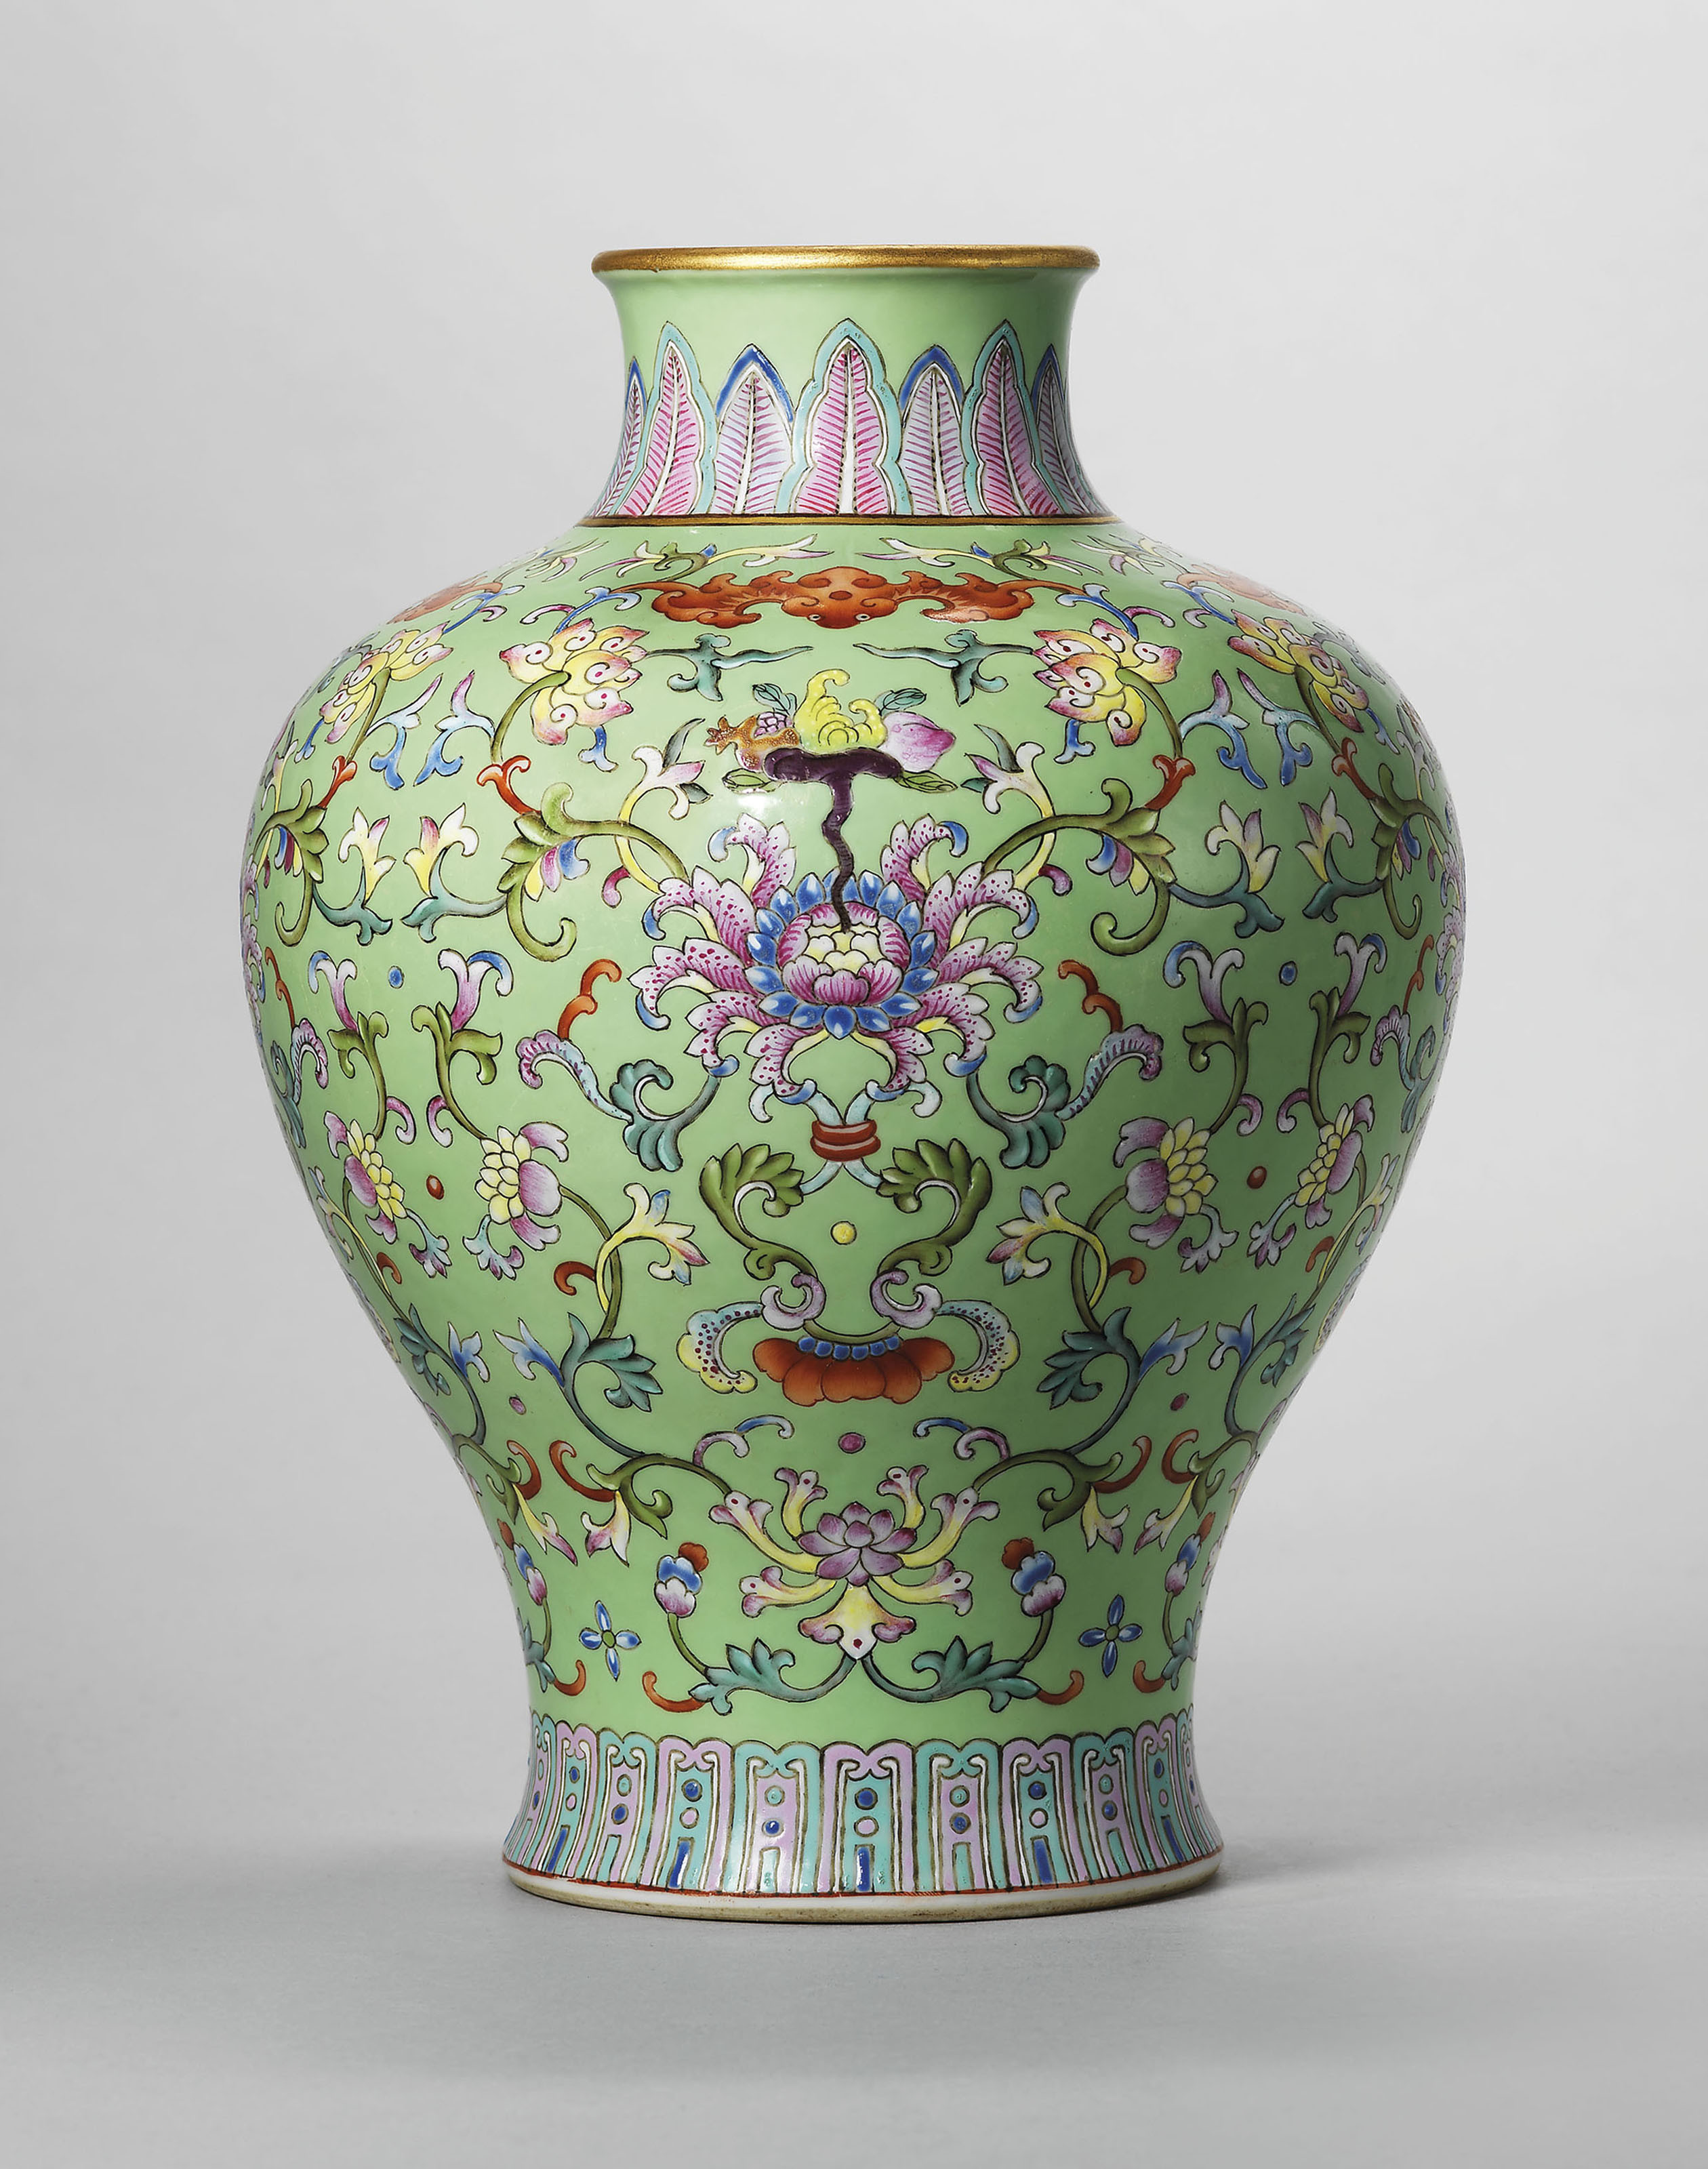 15 Wonderful Qianlong Vase 2024 free download qianlong vase of vase symbolism vase and cellar image avorcor com regarding a to the symbolism of flowers on chinese ceramics christie s